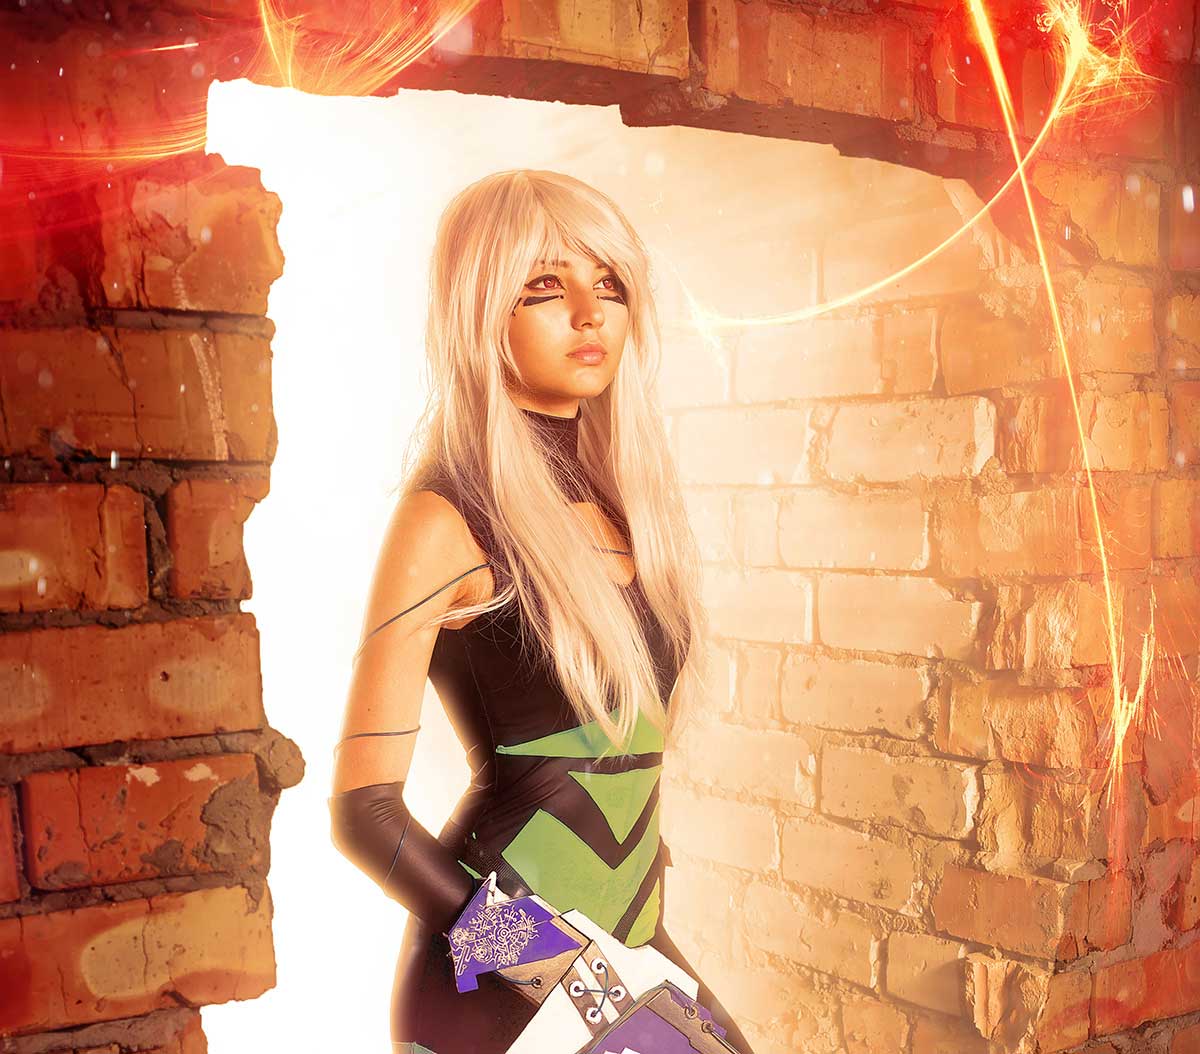 Young girl holding a blade in the dungeon Original cosplay character. Artistic shoot, new conceptual idea. Bilder digital nachbeleuchten